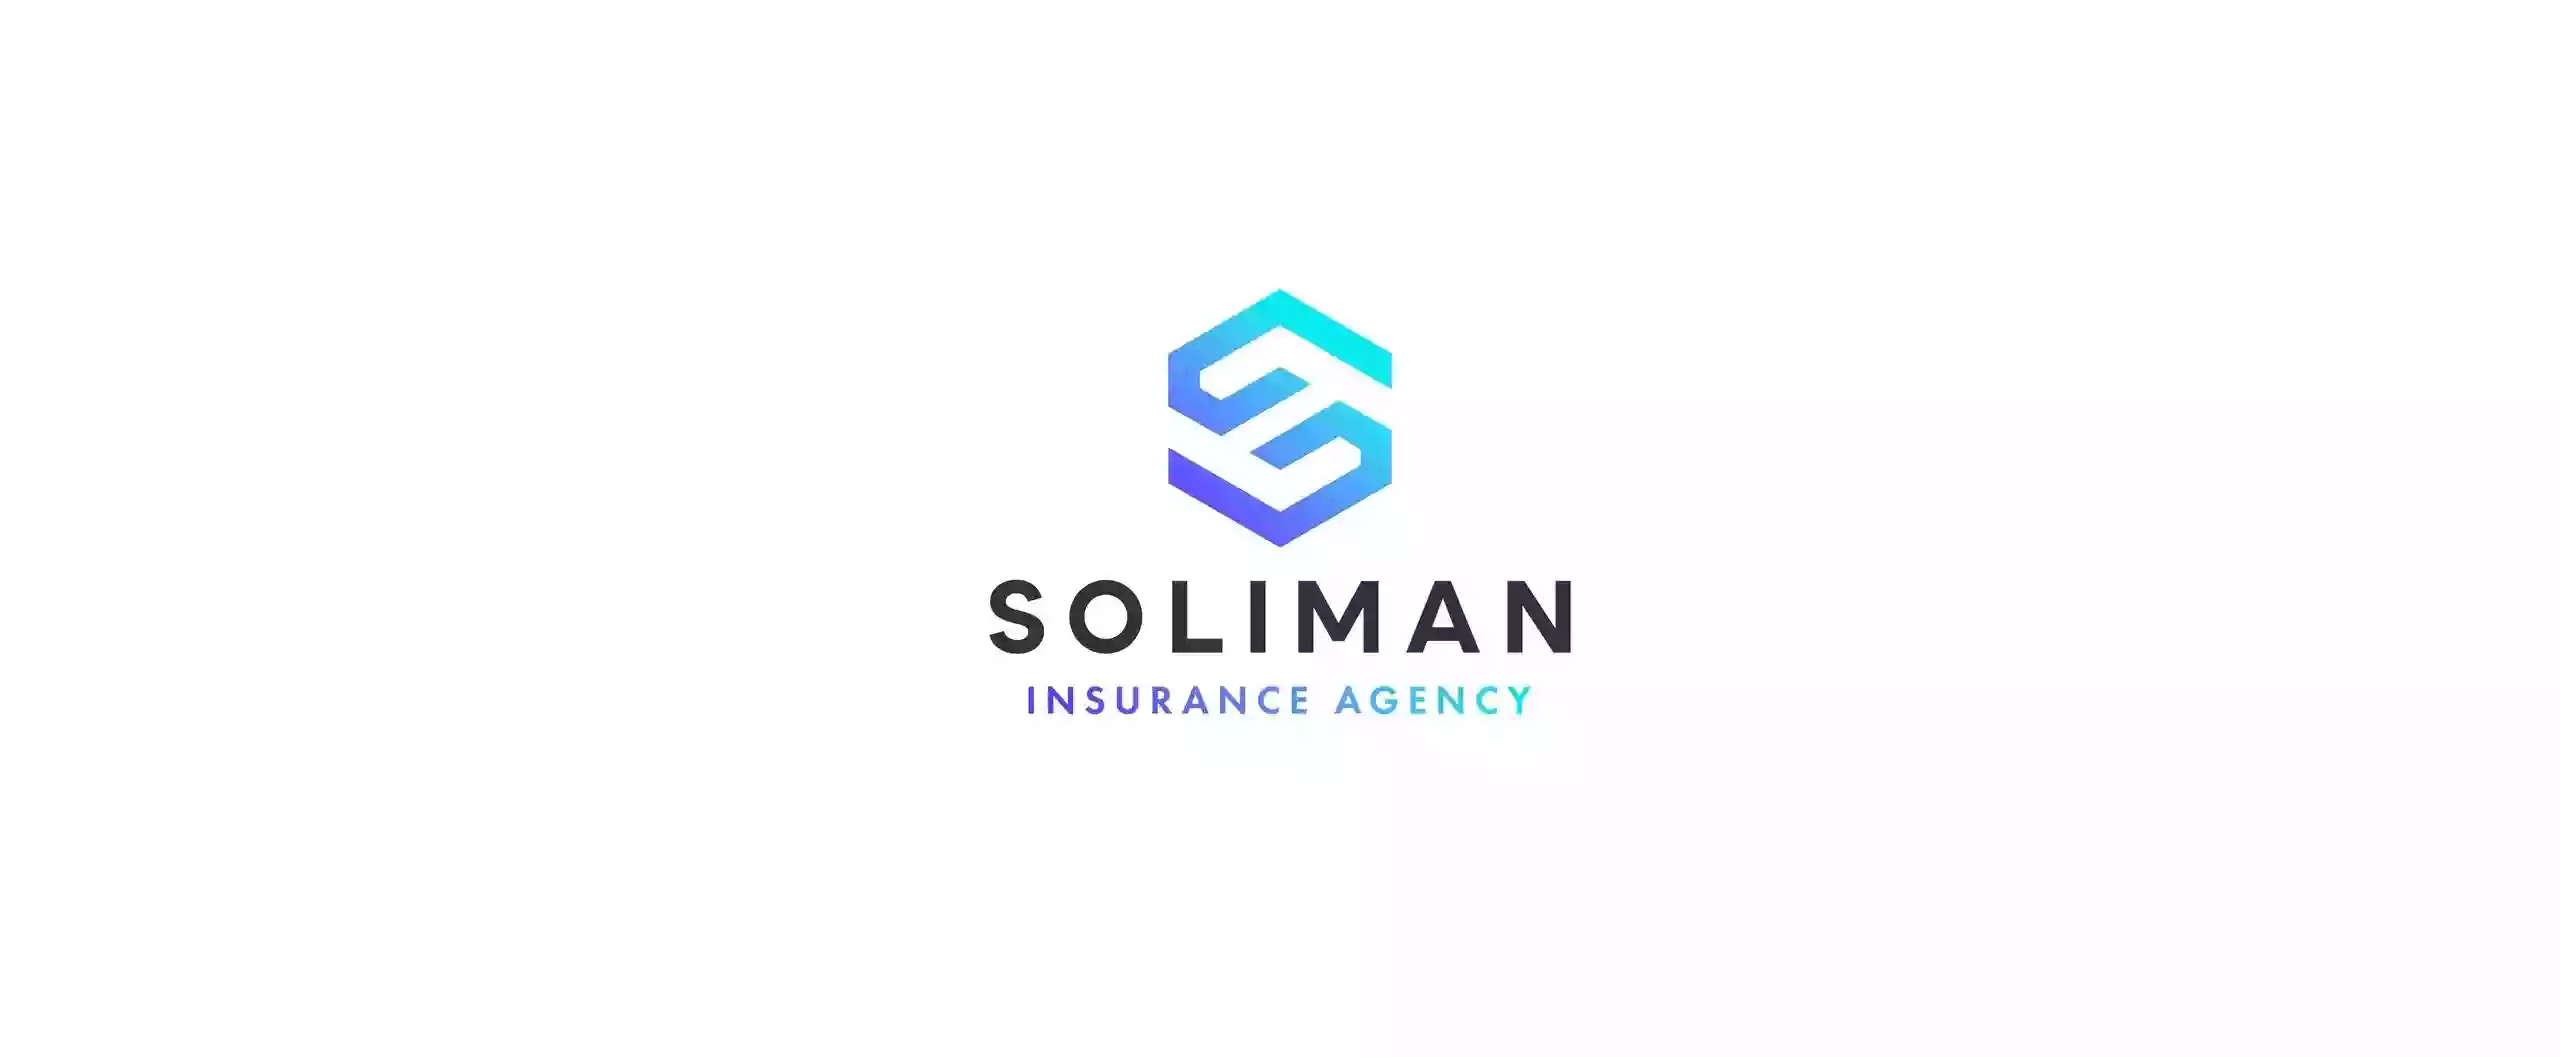 Soliman Insurance Agency